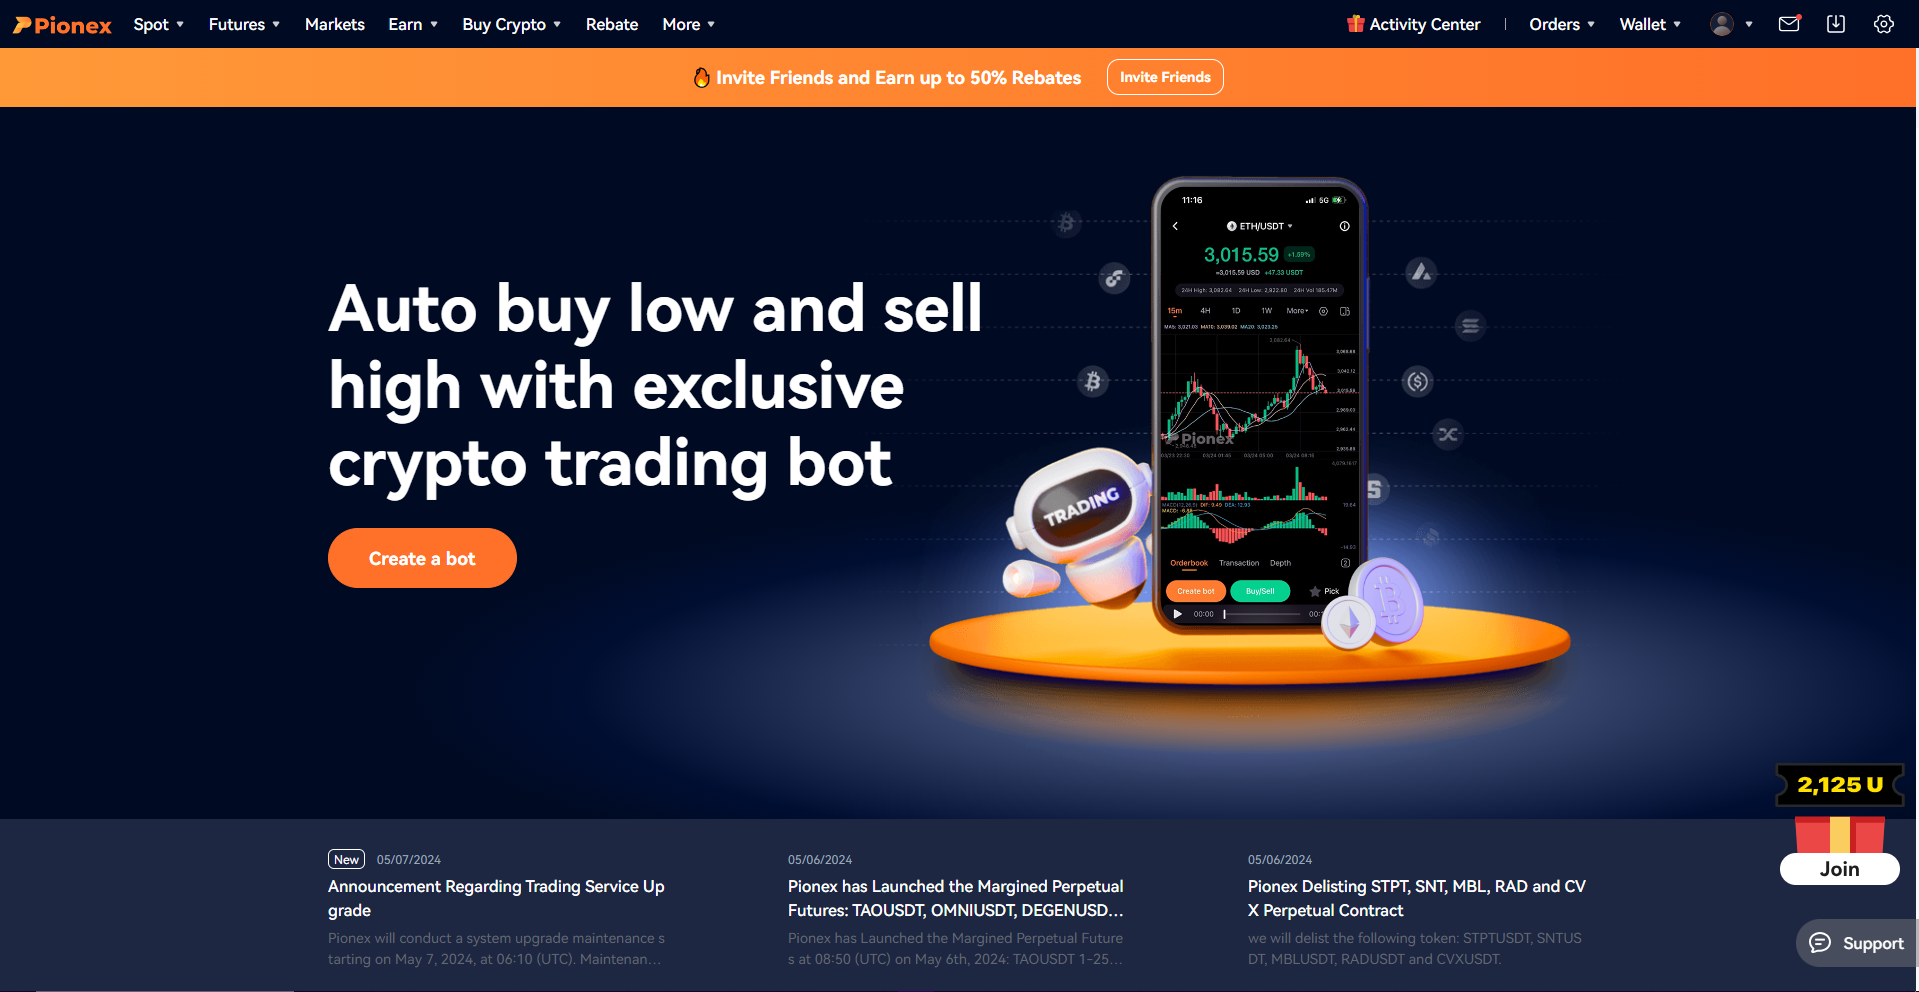 Streamline crypto trading with smart AI bots